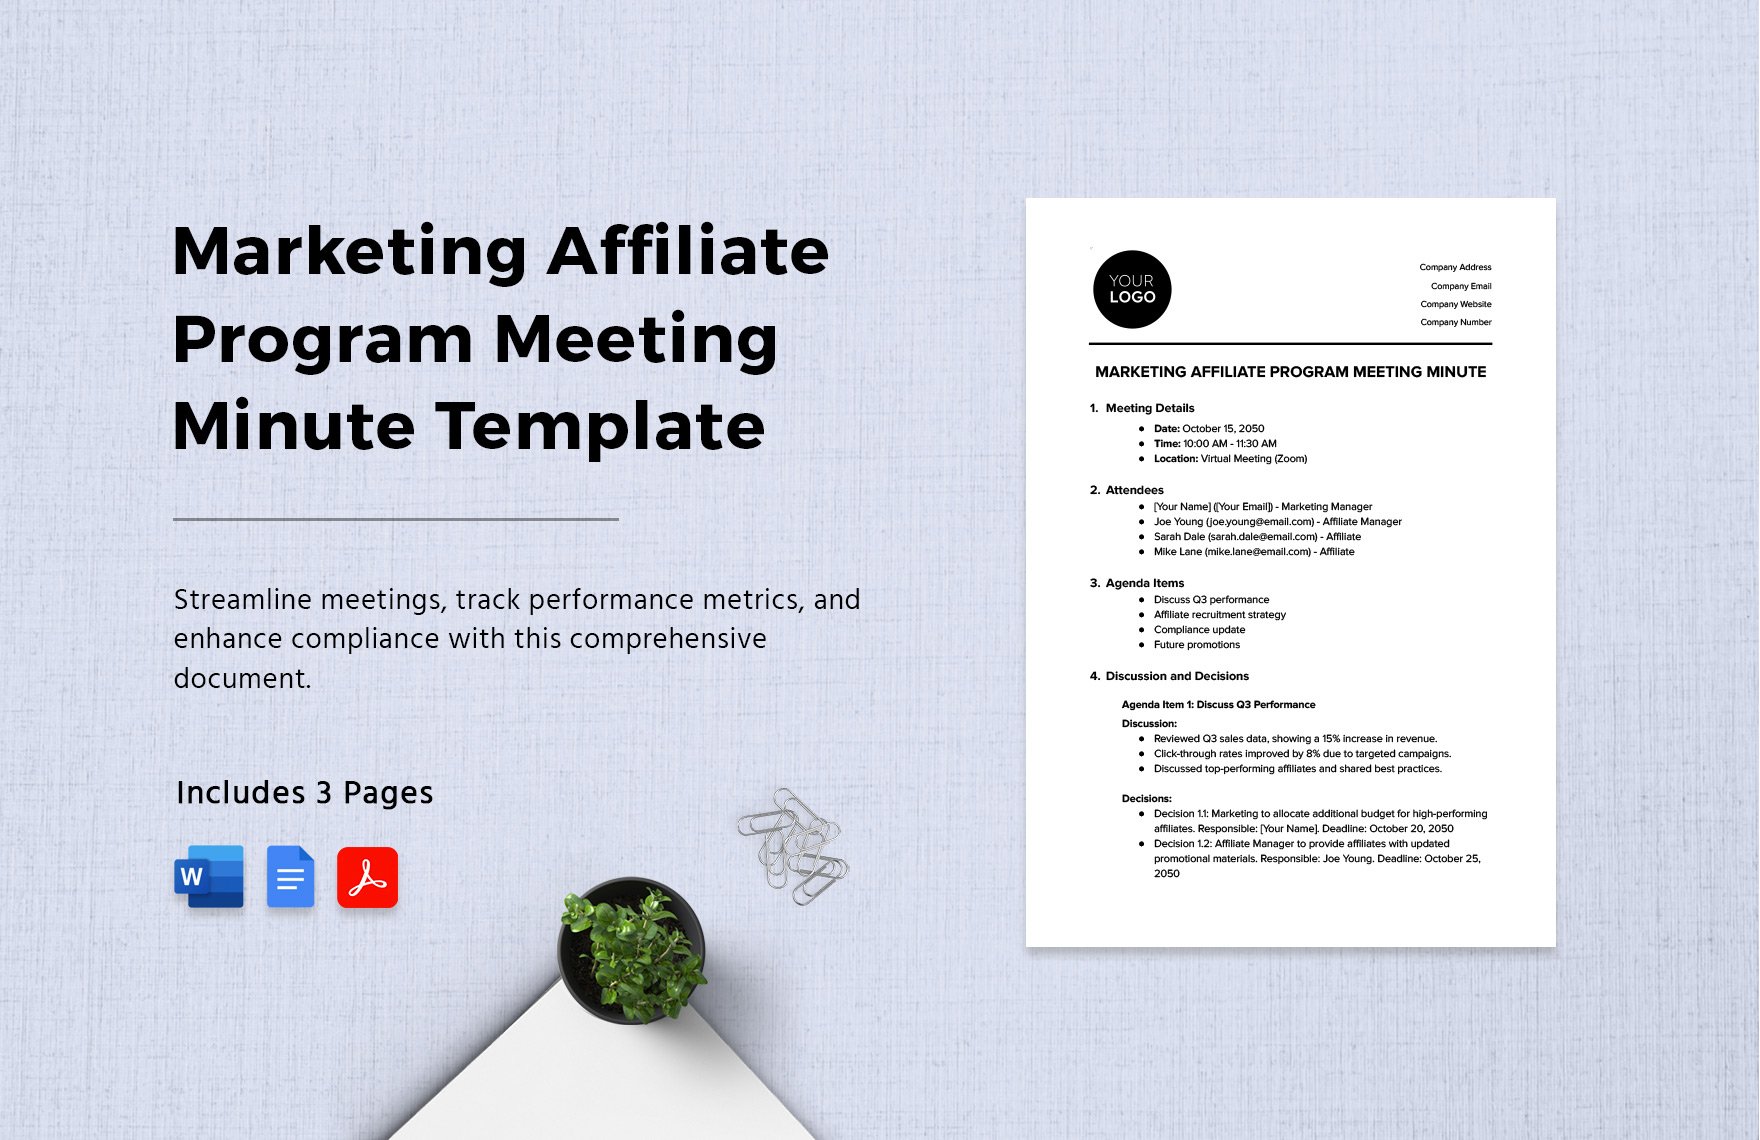 Marketing Affiliate Program Meeting Minute Template in Word, Google Docs, PDF